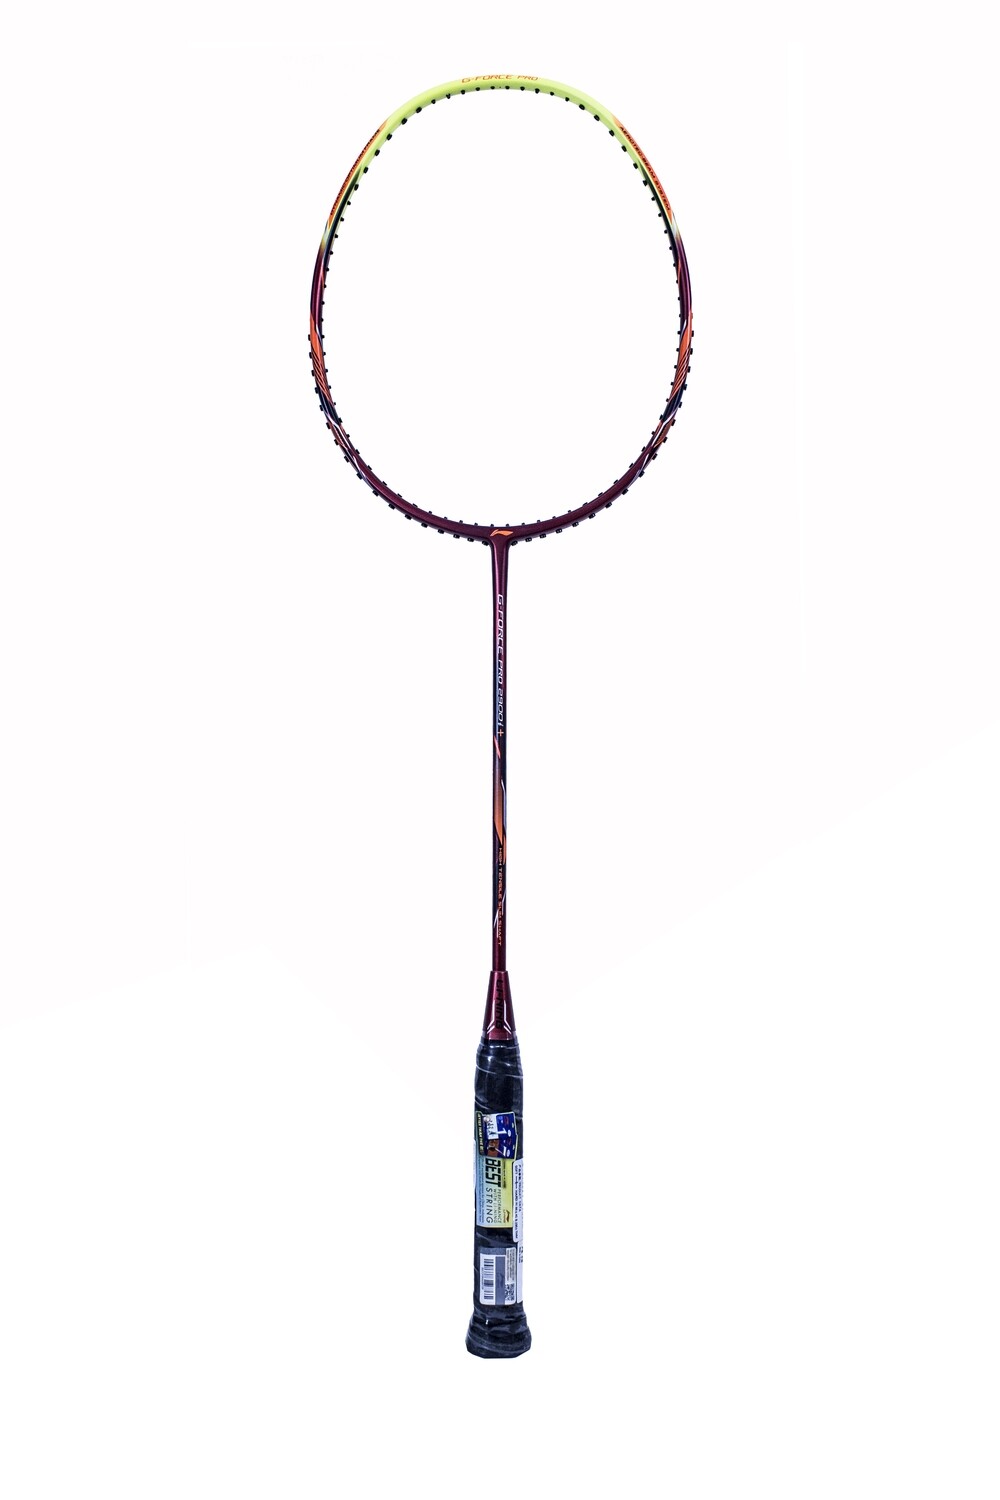 LI-NING G-Force Pro 2900i+ Badminton Racquet -